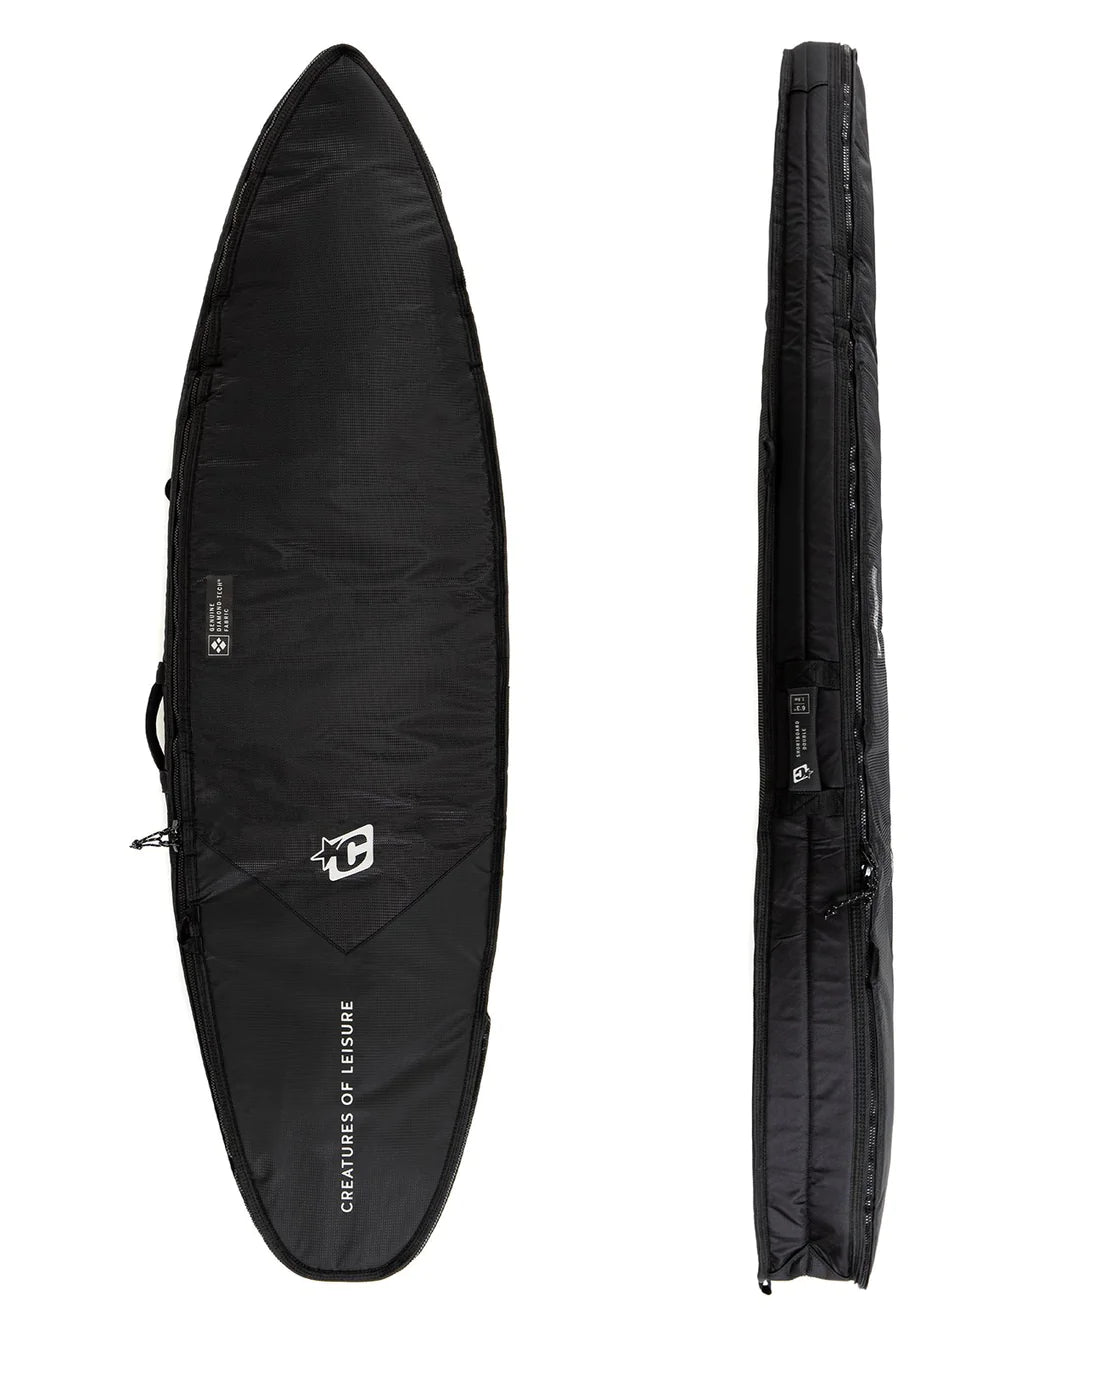 Creatures of Leisure Shortboard Double DT2.0 Surfboard Bag